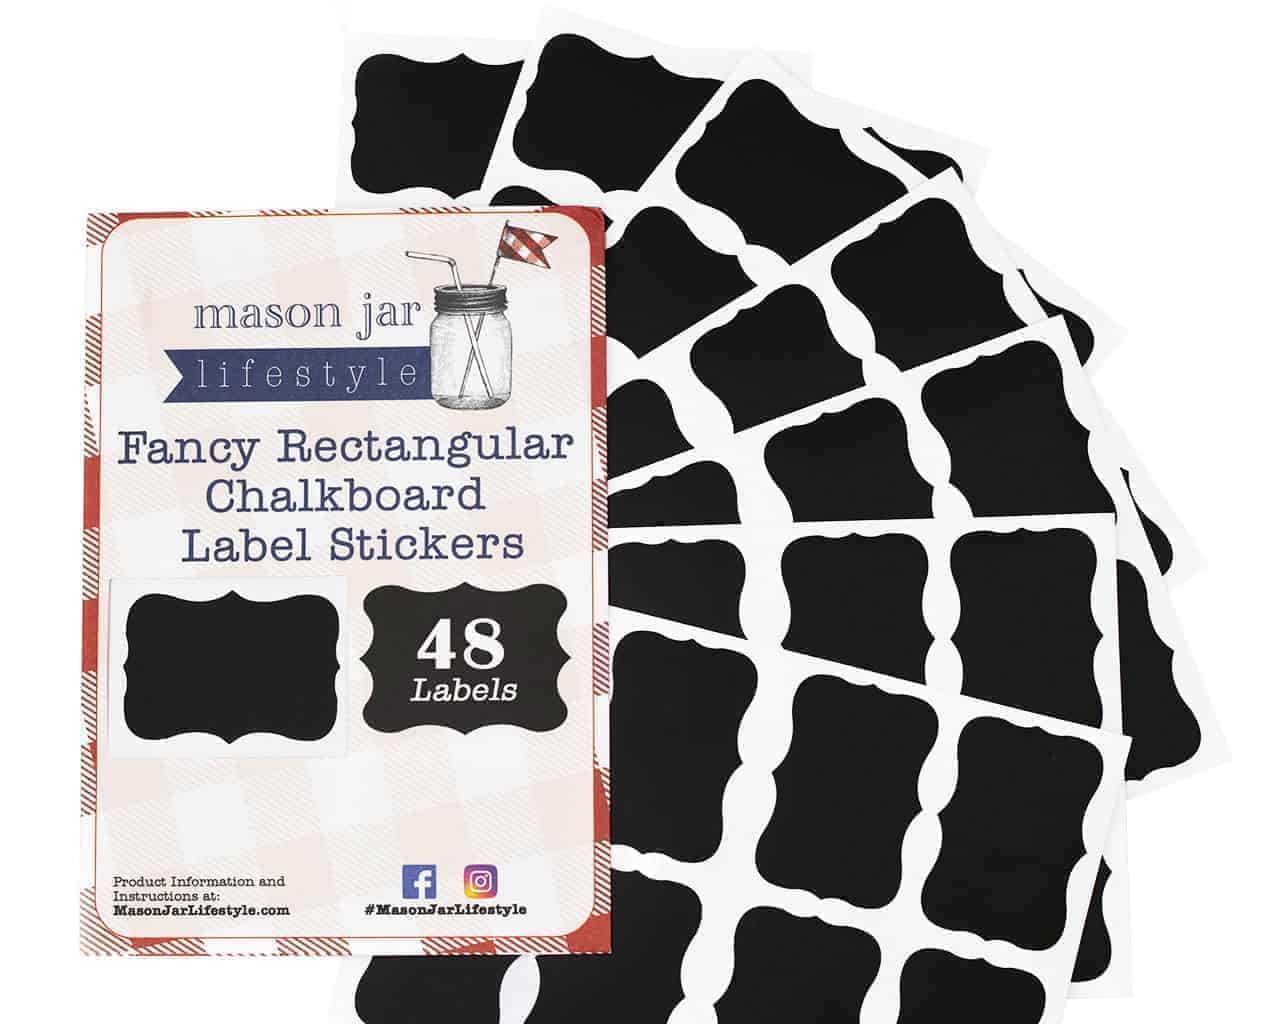 mason-jar-lifestyle-chalkboard-labels-stickers-fancy-rectangle-package